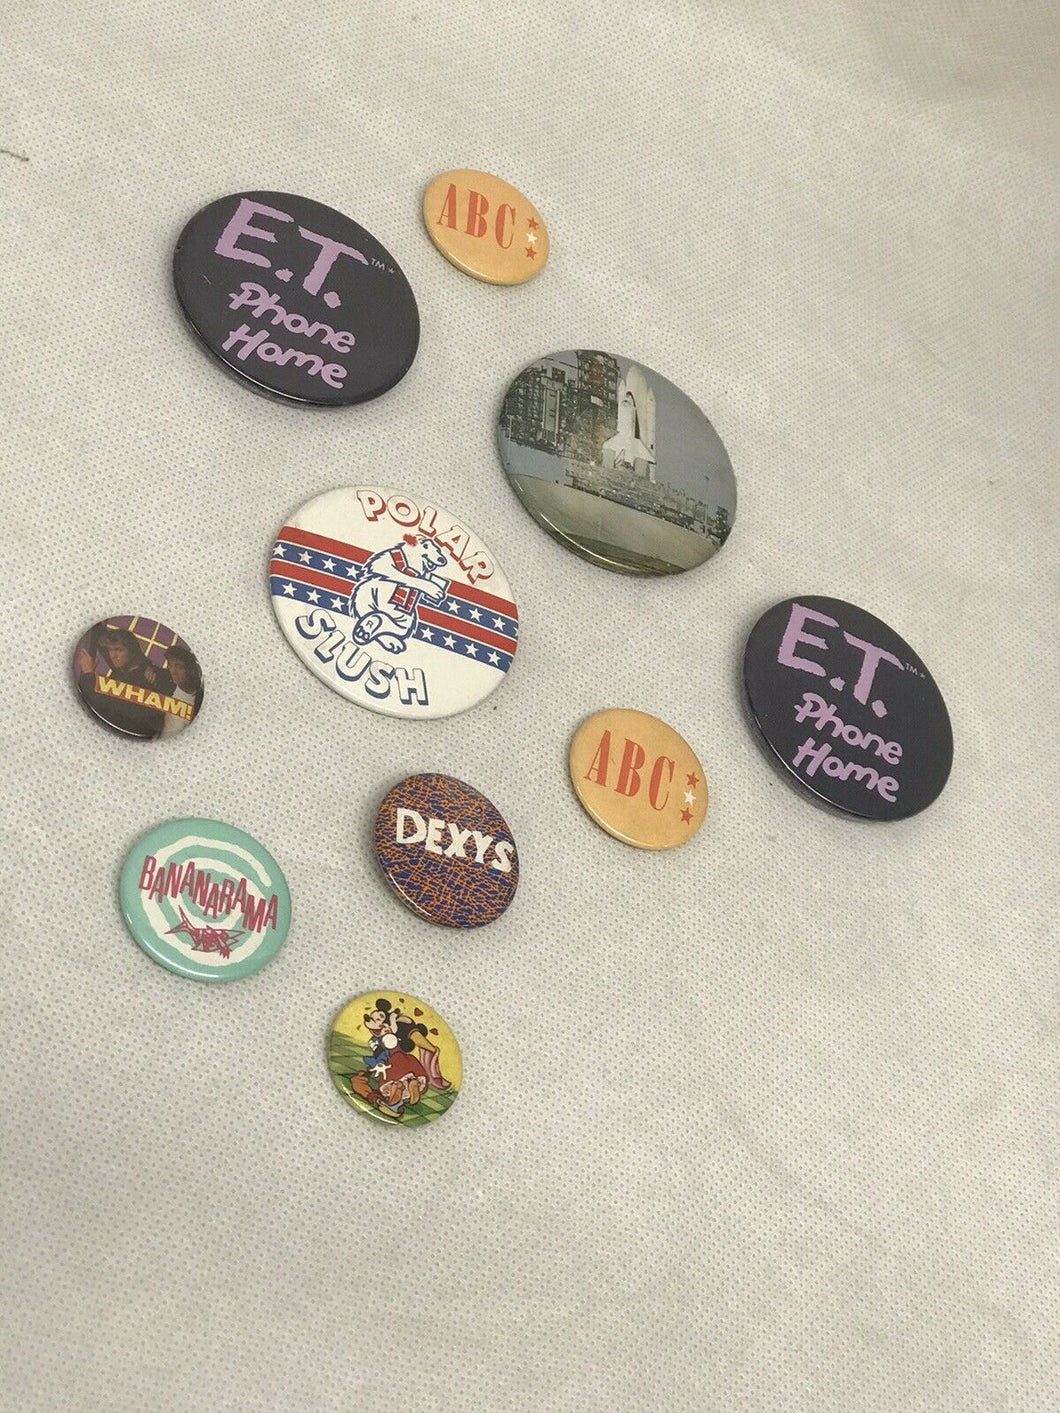 1980’s Badges